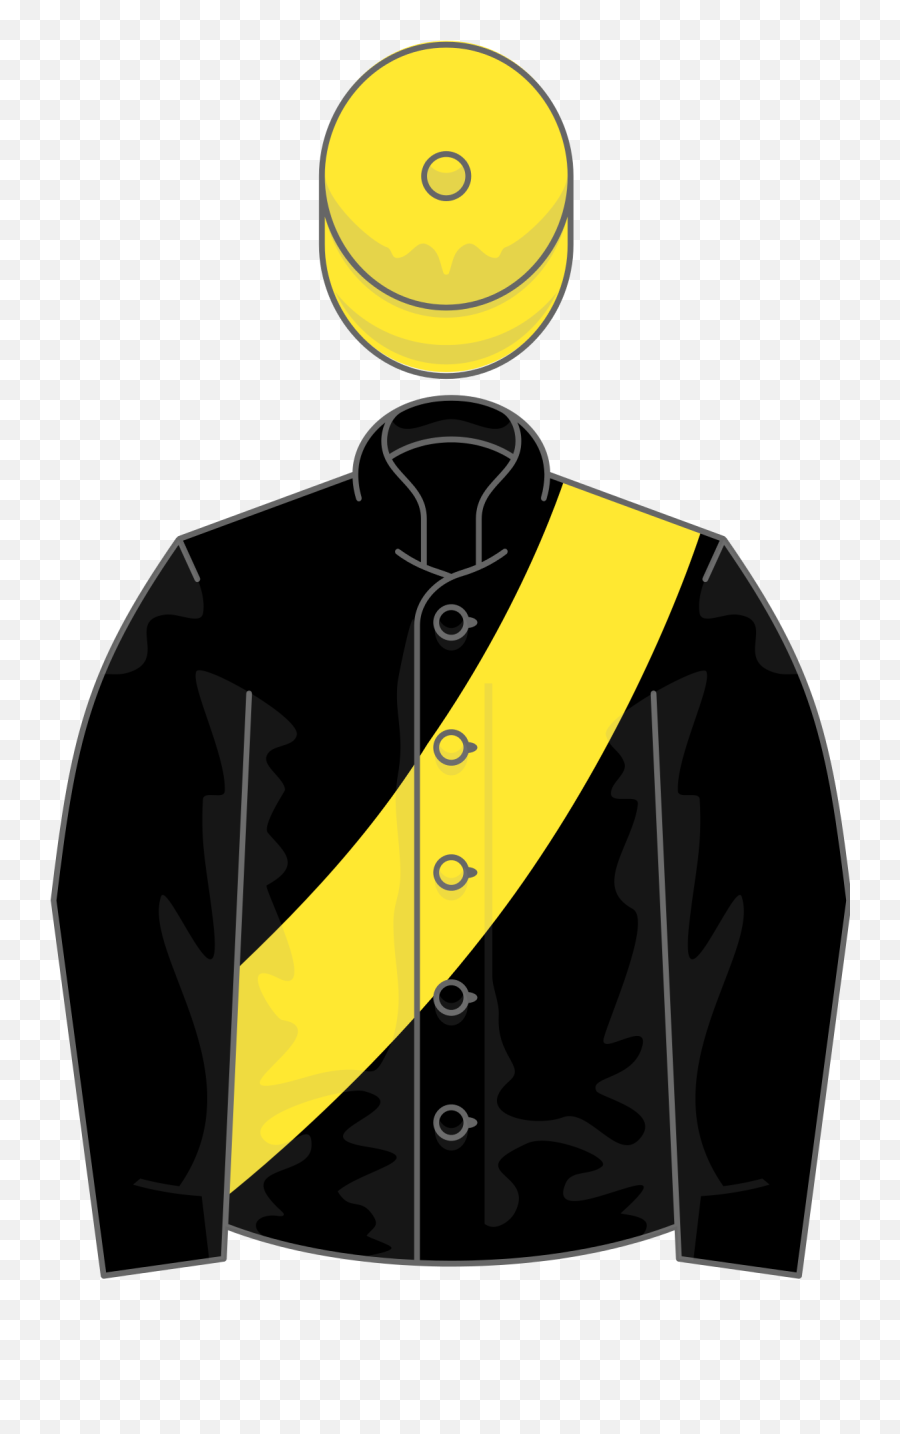 Fileowner Mrs M S Tevershamsvg - Wikimedia Commons Horse Racing Emoji,Personal Emoticon